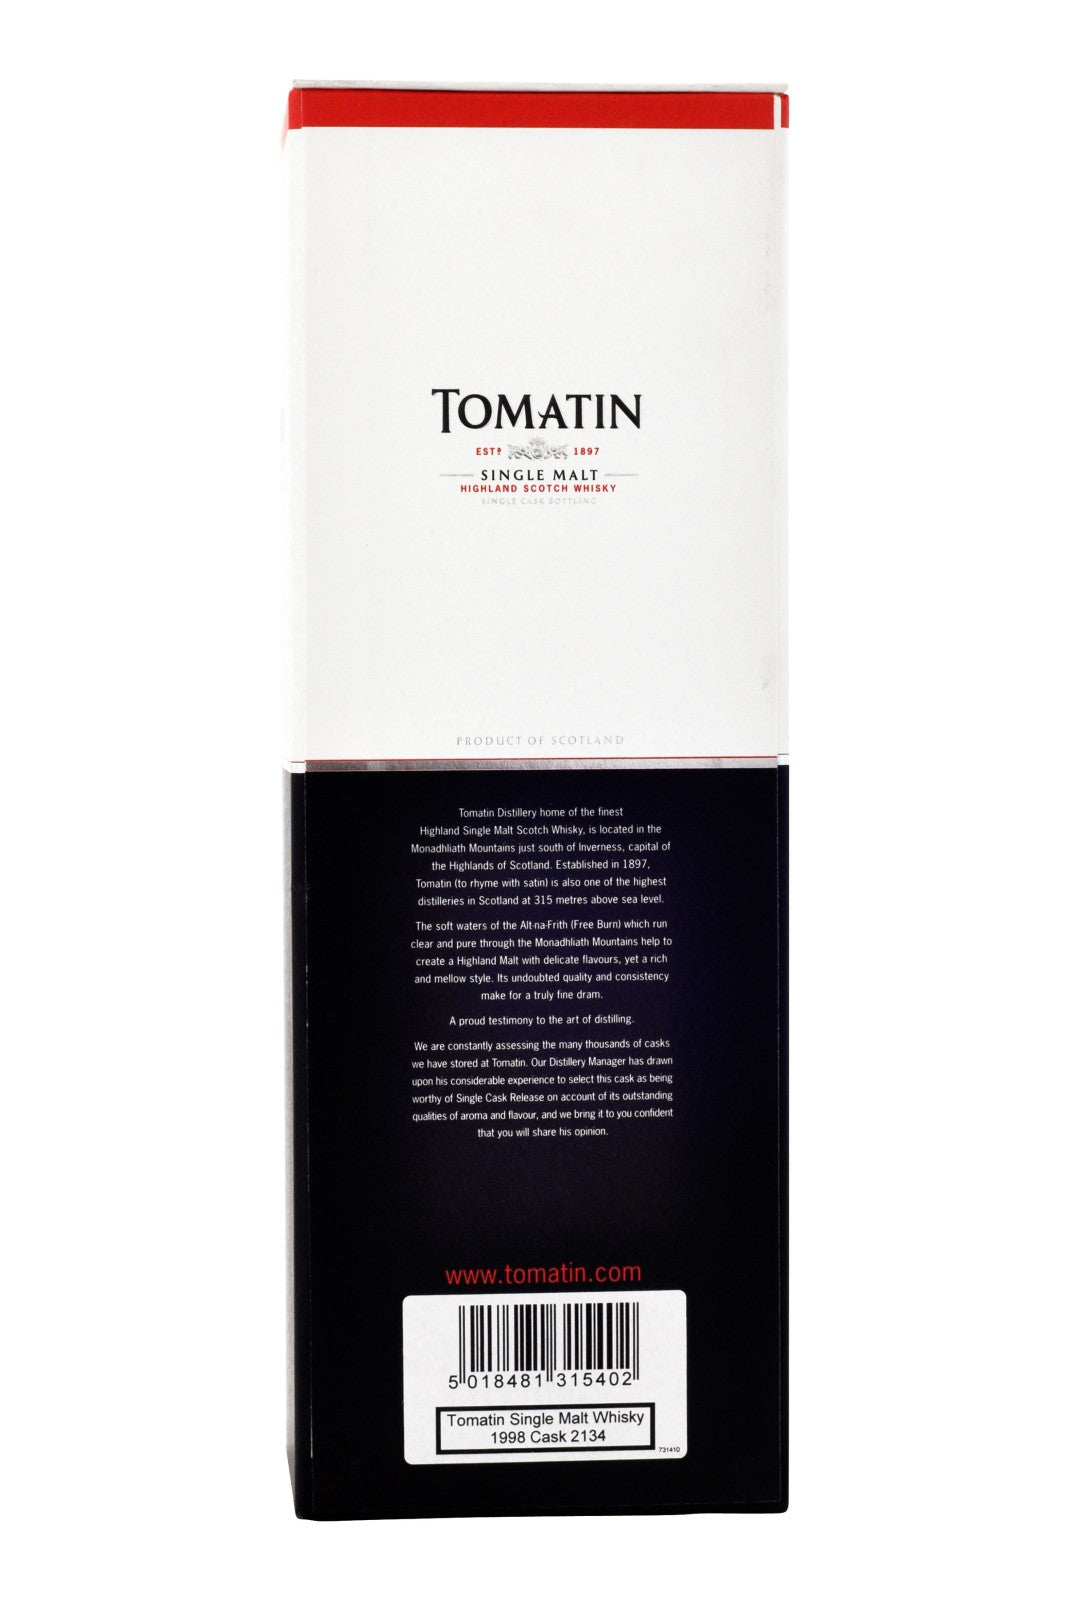 Tomatin 1998 Cask 2134